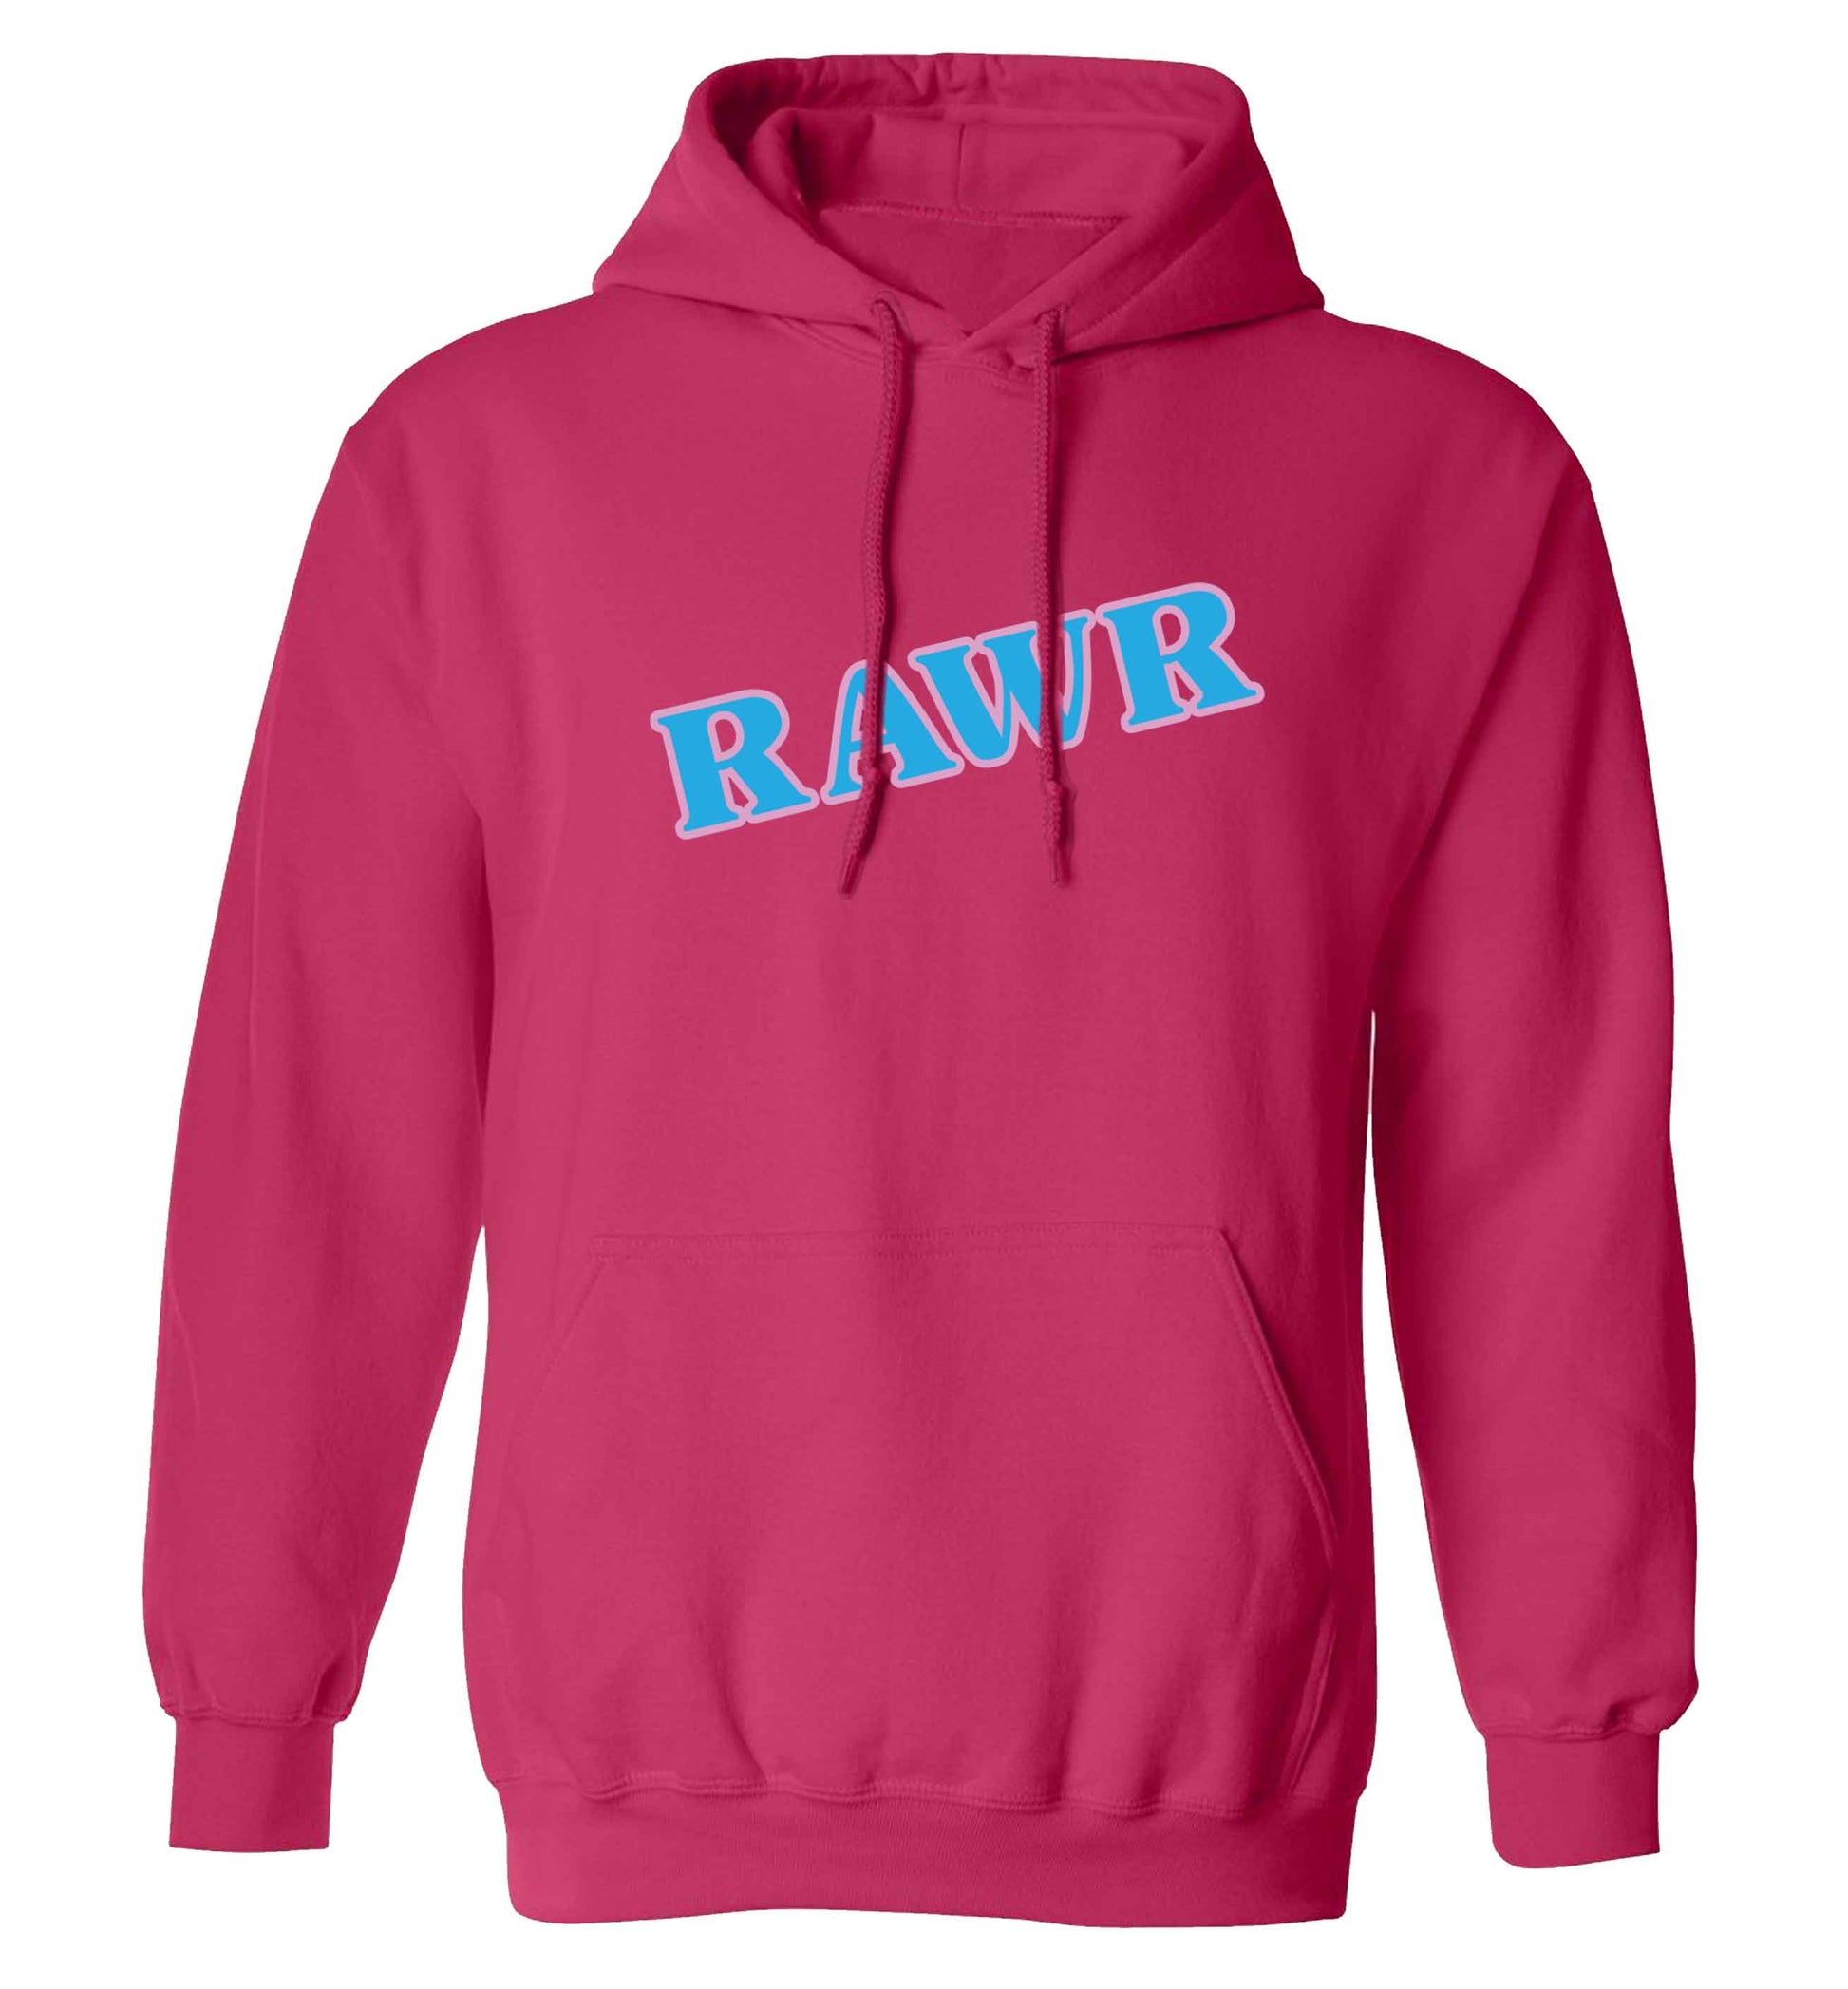 Rawr adults unisex pink hoodie 2XL